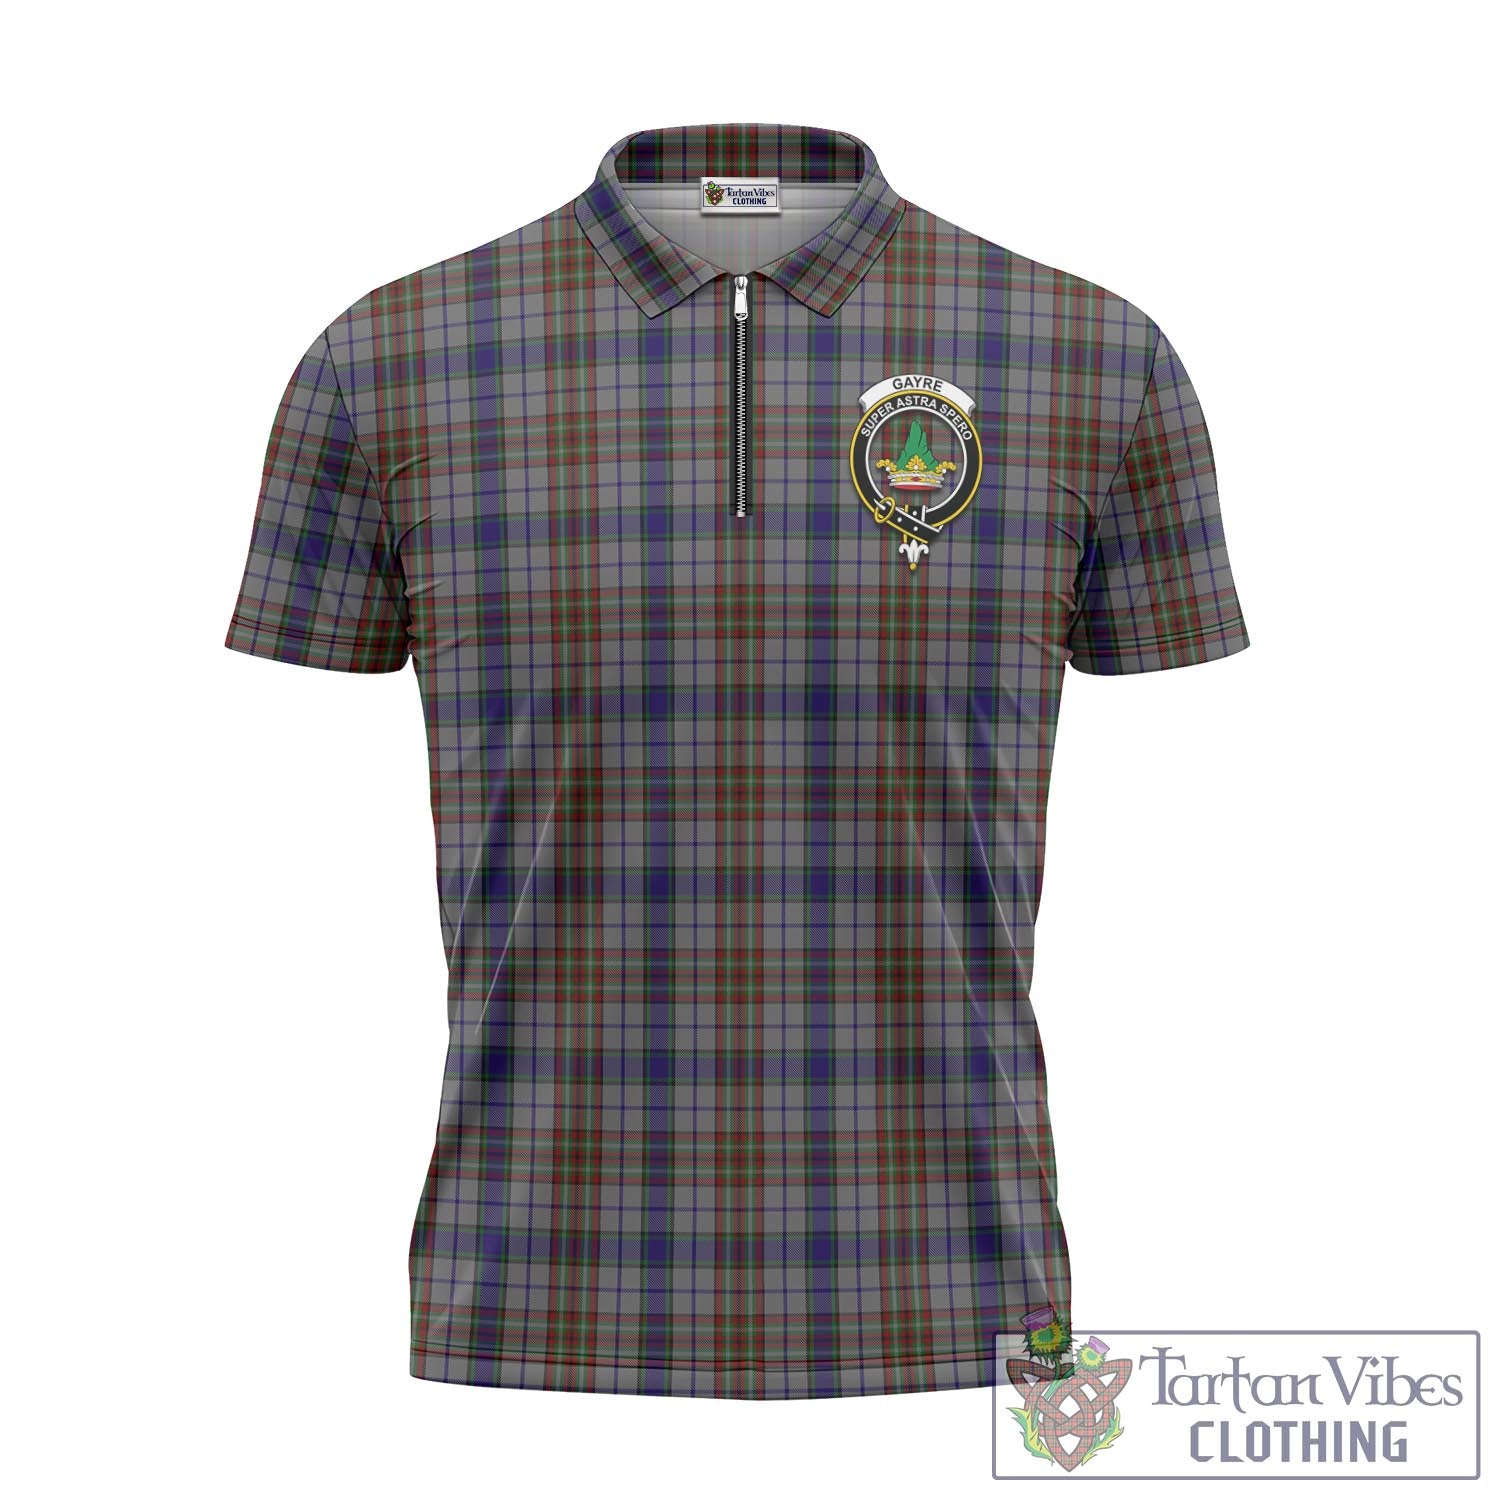 Tartan Vibes Clothing Gayre Hunting Tartan Zipper Polo Shirt with Family Crest